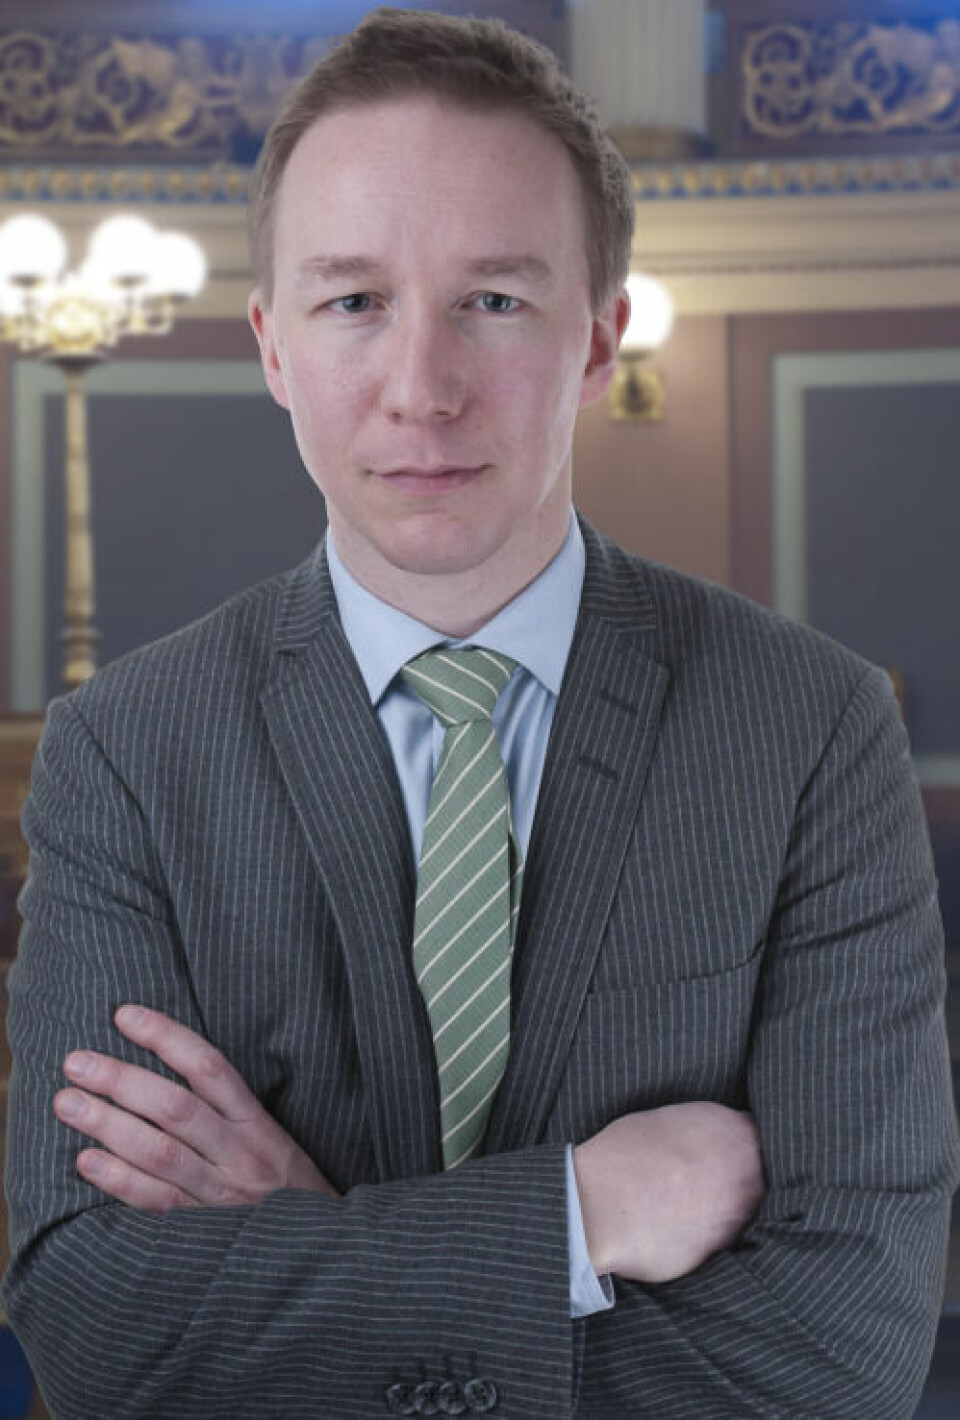 Førsteamanuensis ved juridisk fakultet, Jon Christian Fløysvik Nordrum. 

            
                Foto: UiO